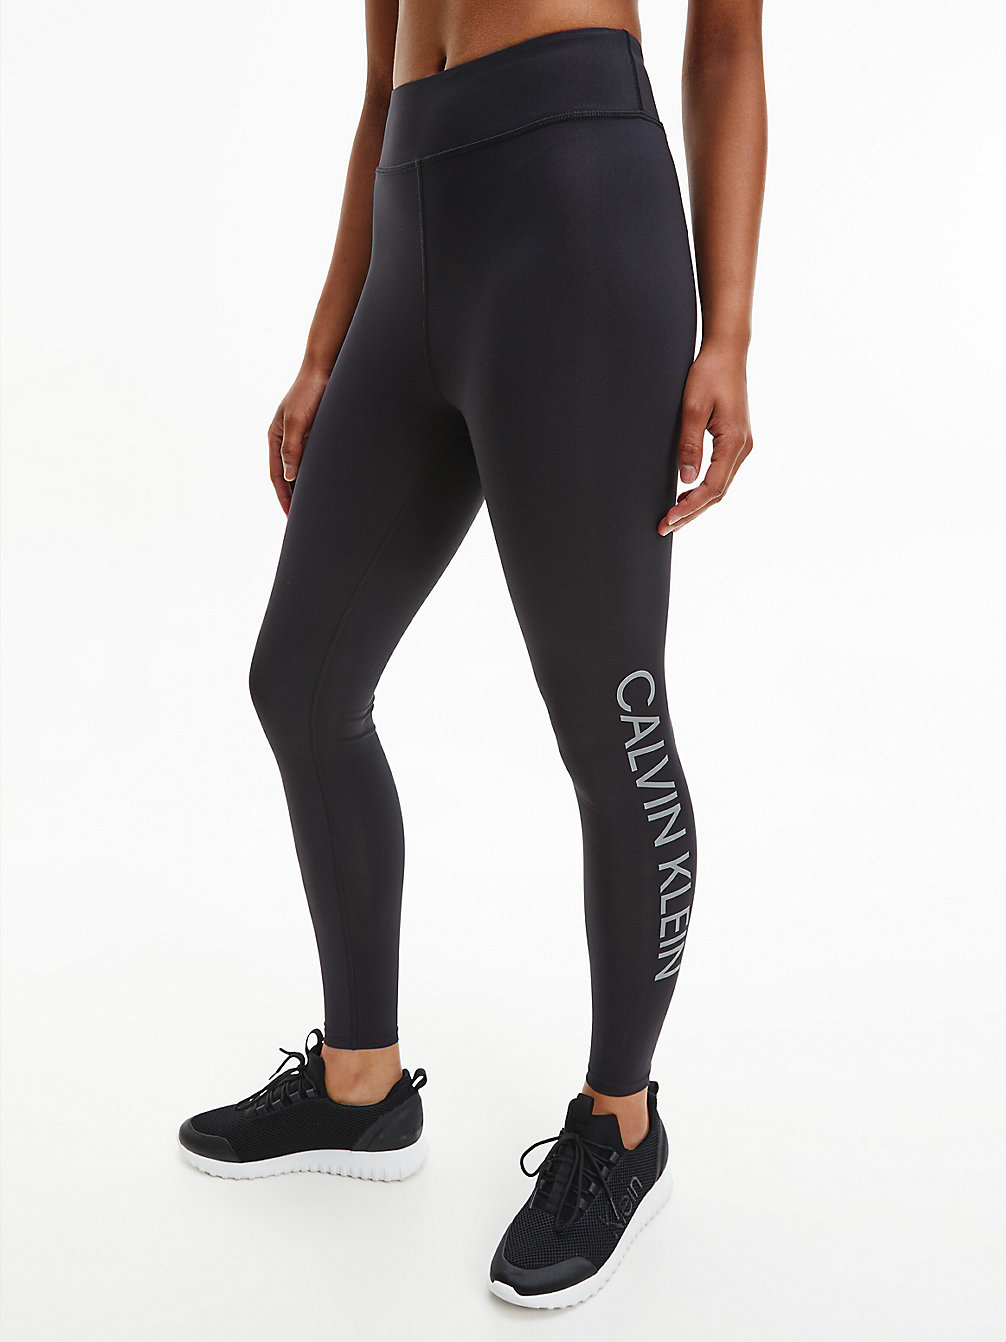 CK BLACK/REFLECTIVE SILVER Sport Leggings undefined Damen Calvin Klein